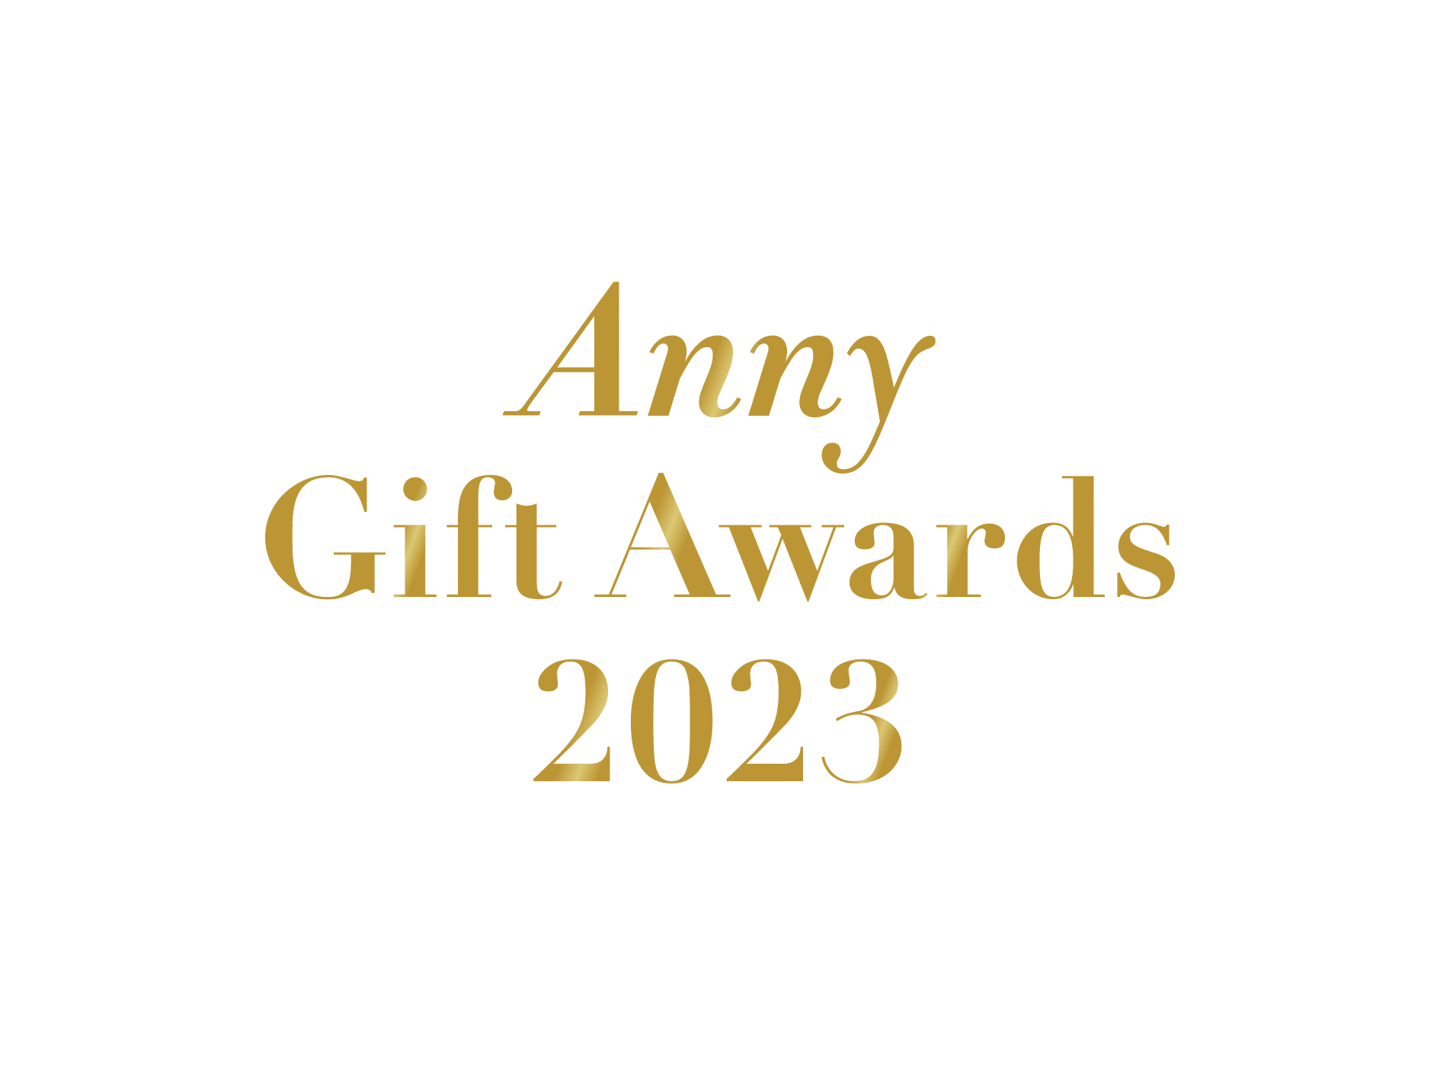 Anny Gift Awards 2023